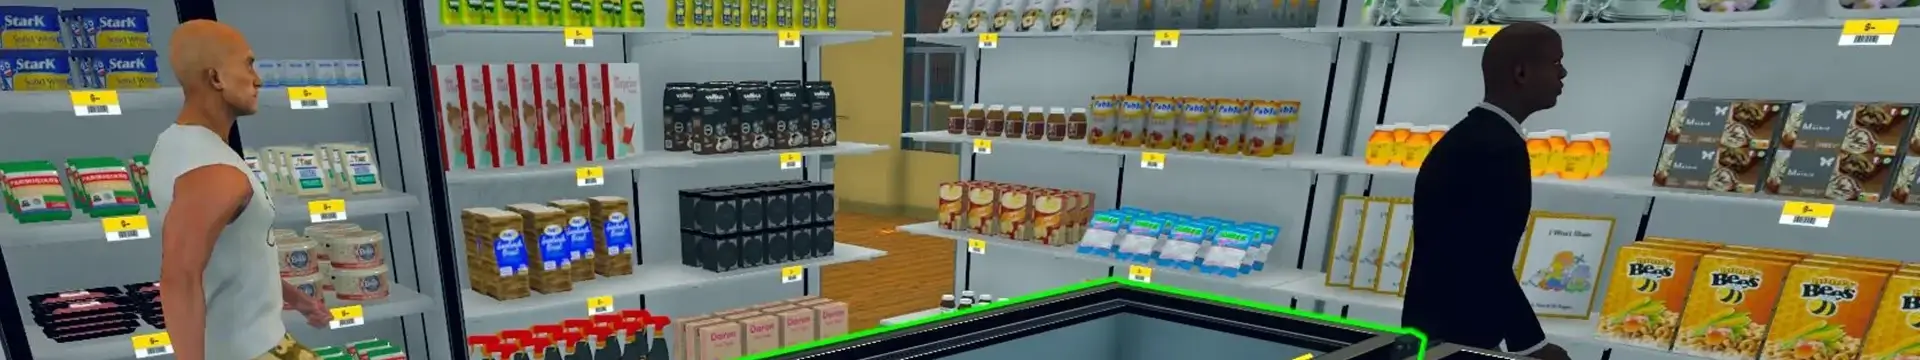 Supermarket Simulator